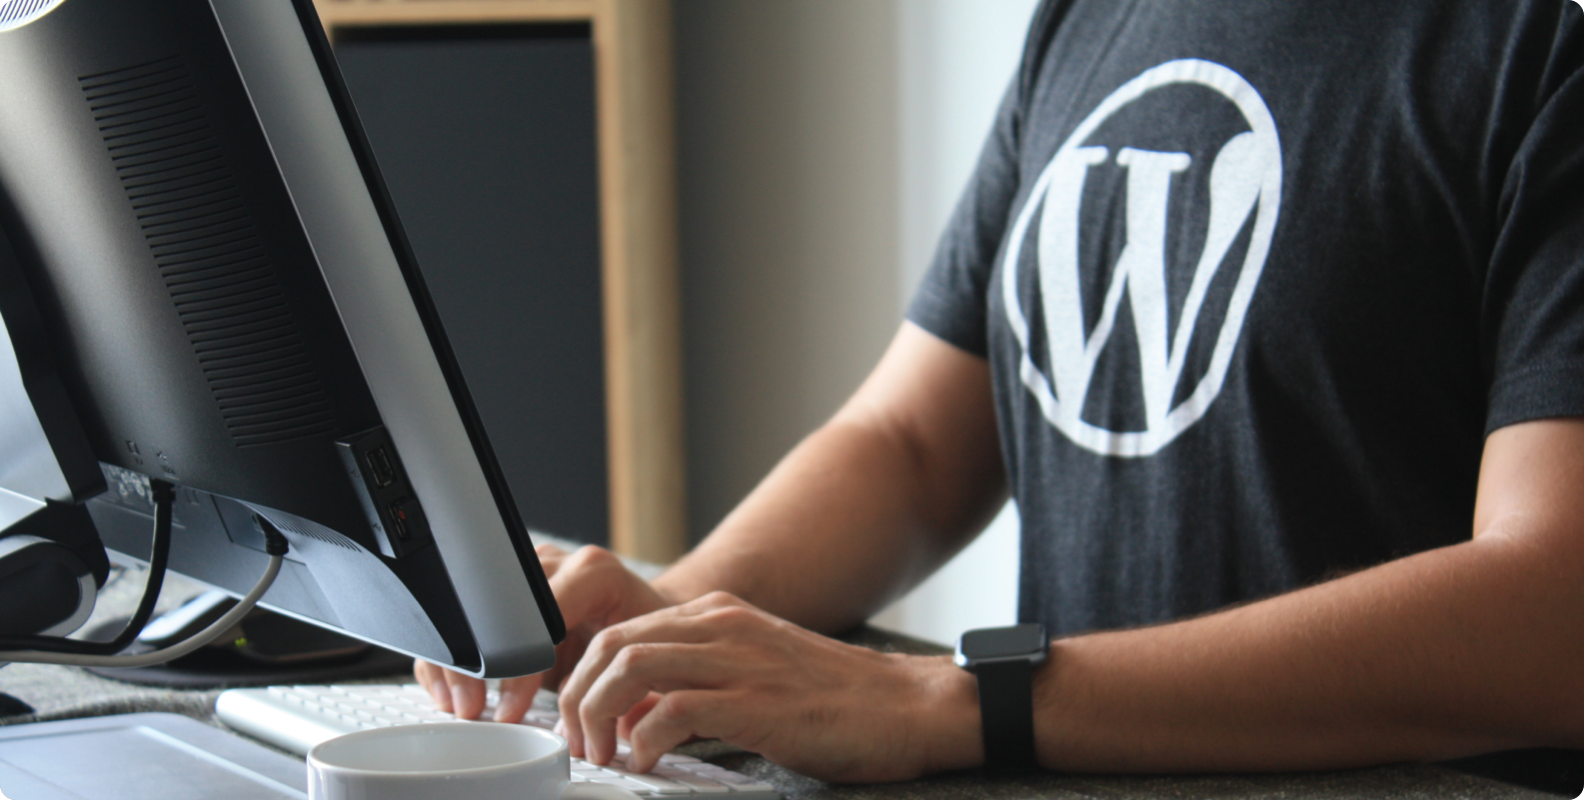 Man sitting at desk with WordPress shirt